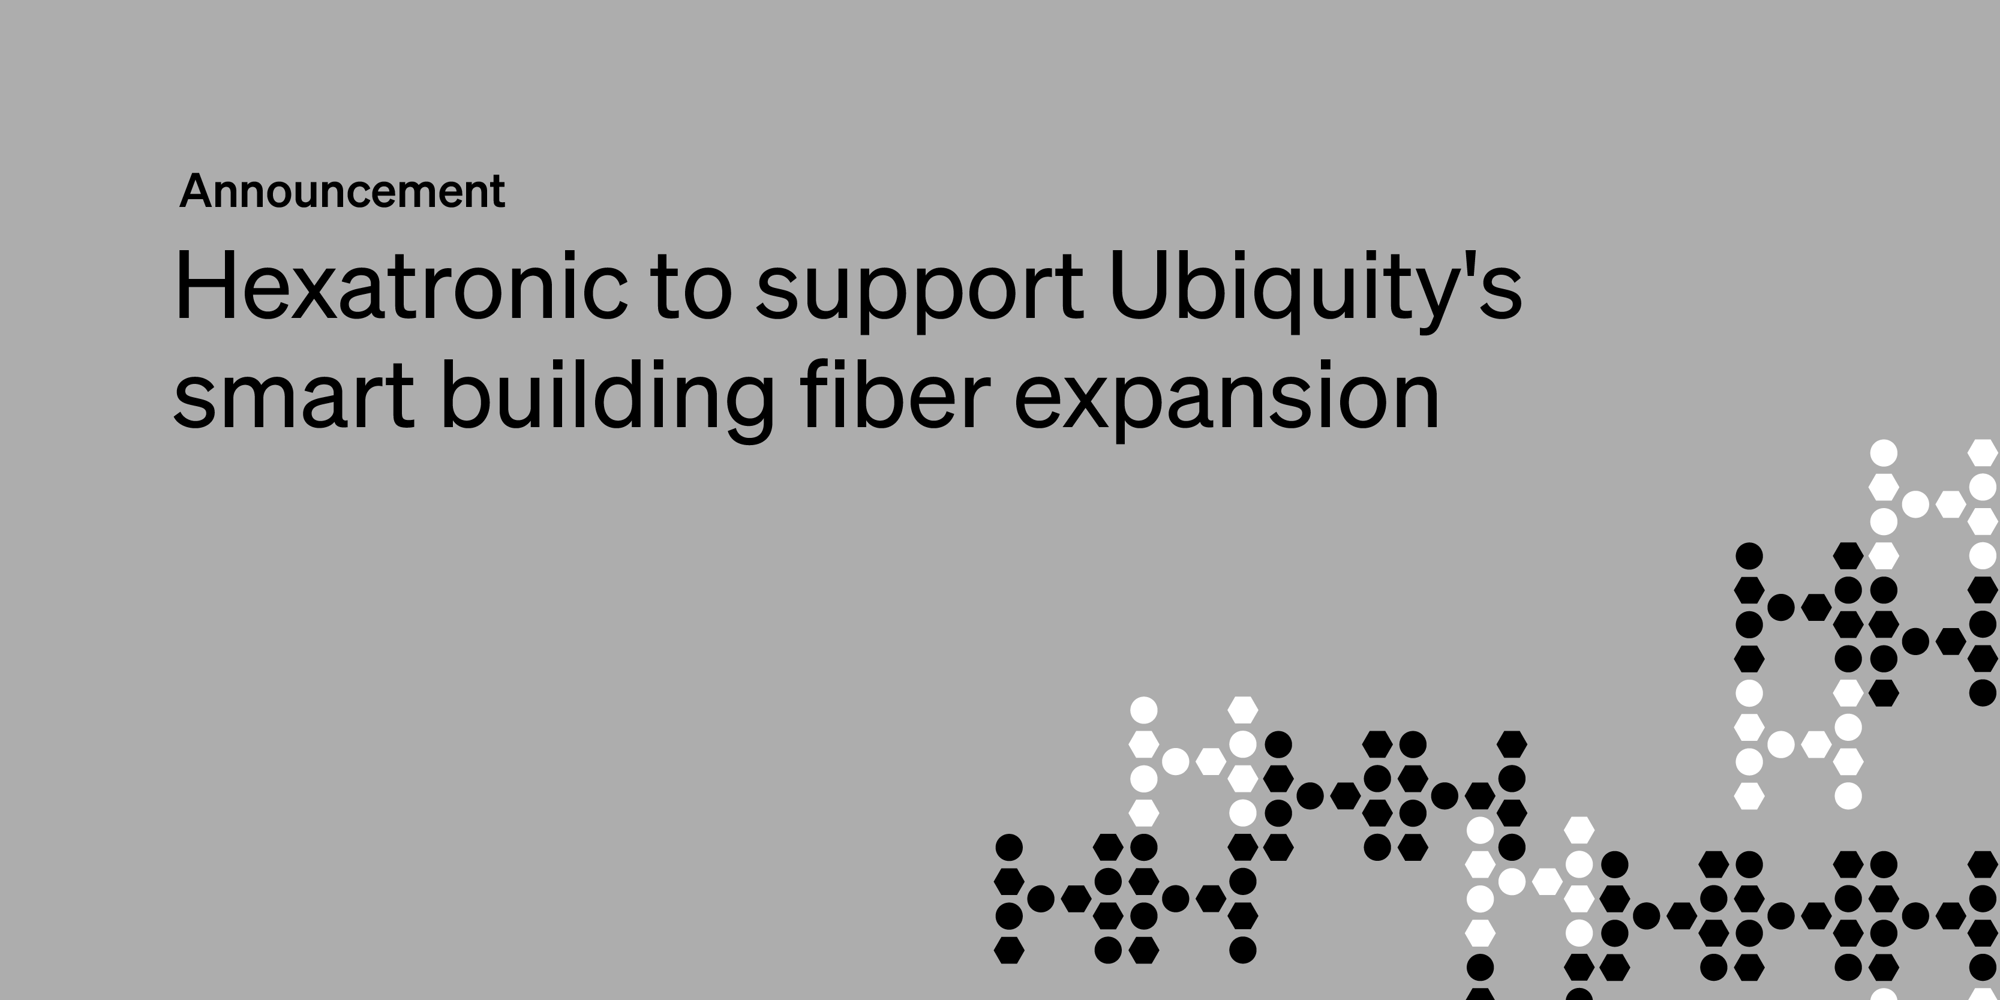 Hexatronic to support Ubiquity’s smart building fiber expansion